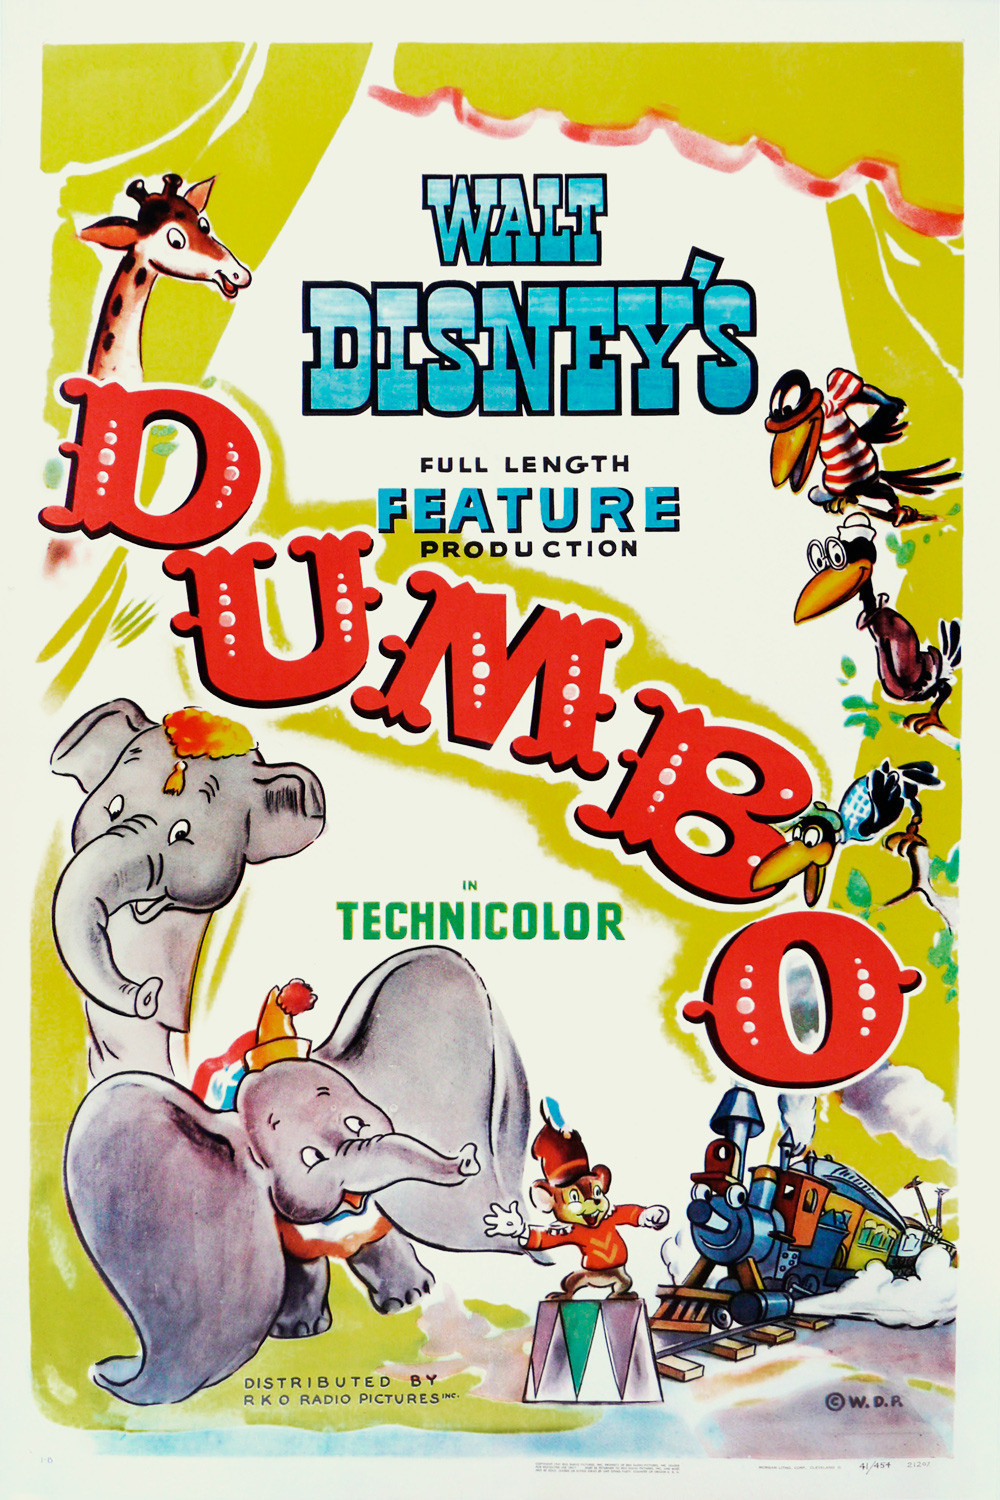 Cinema na Casa das Artes – Dumbo - Evento